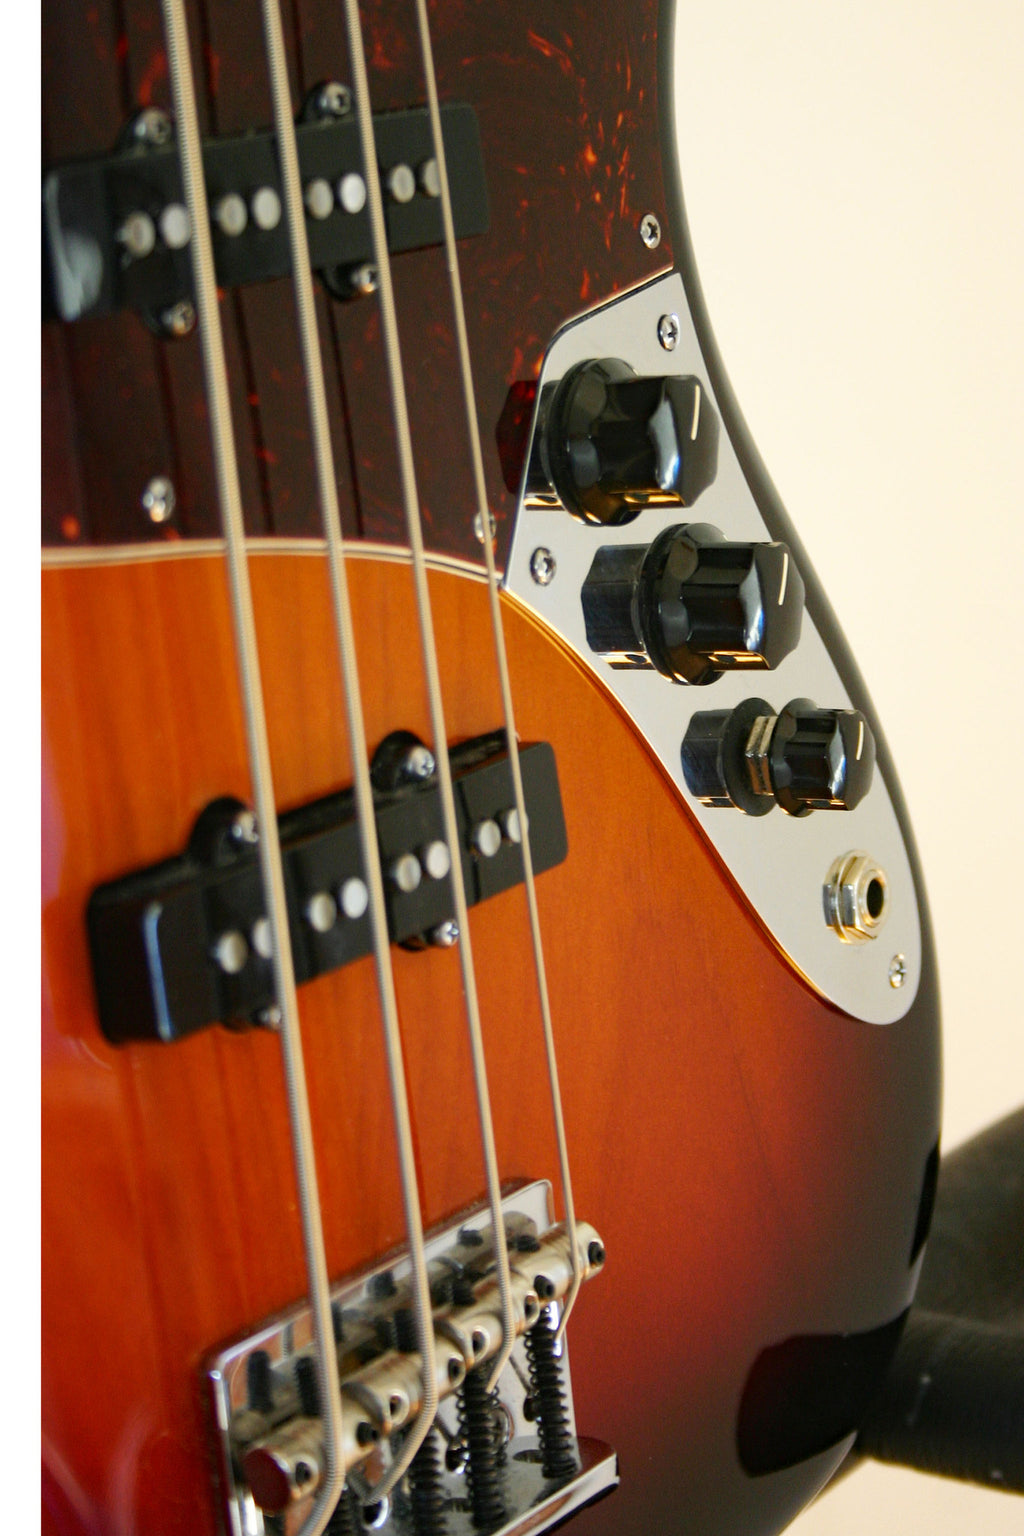 Used Fender American Standard Jazz Bass 3-Tone-Sunburst